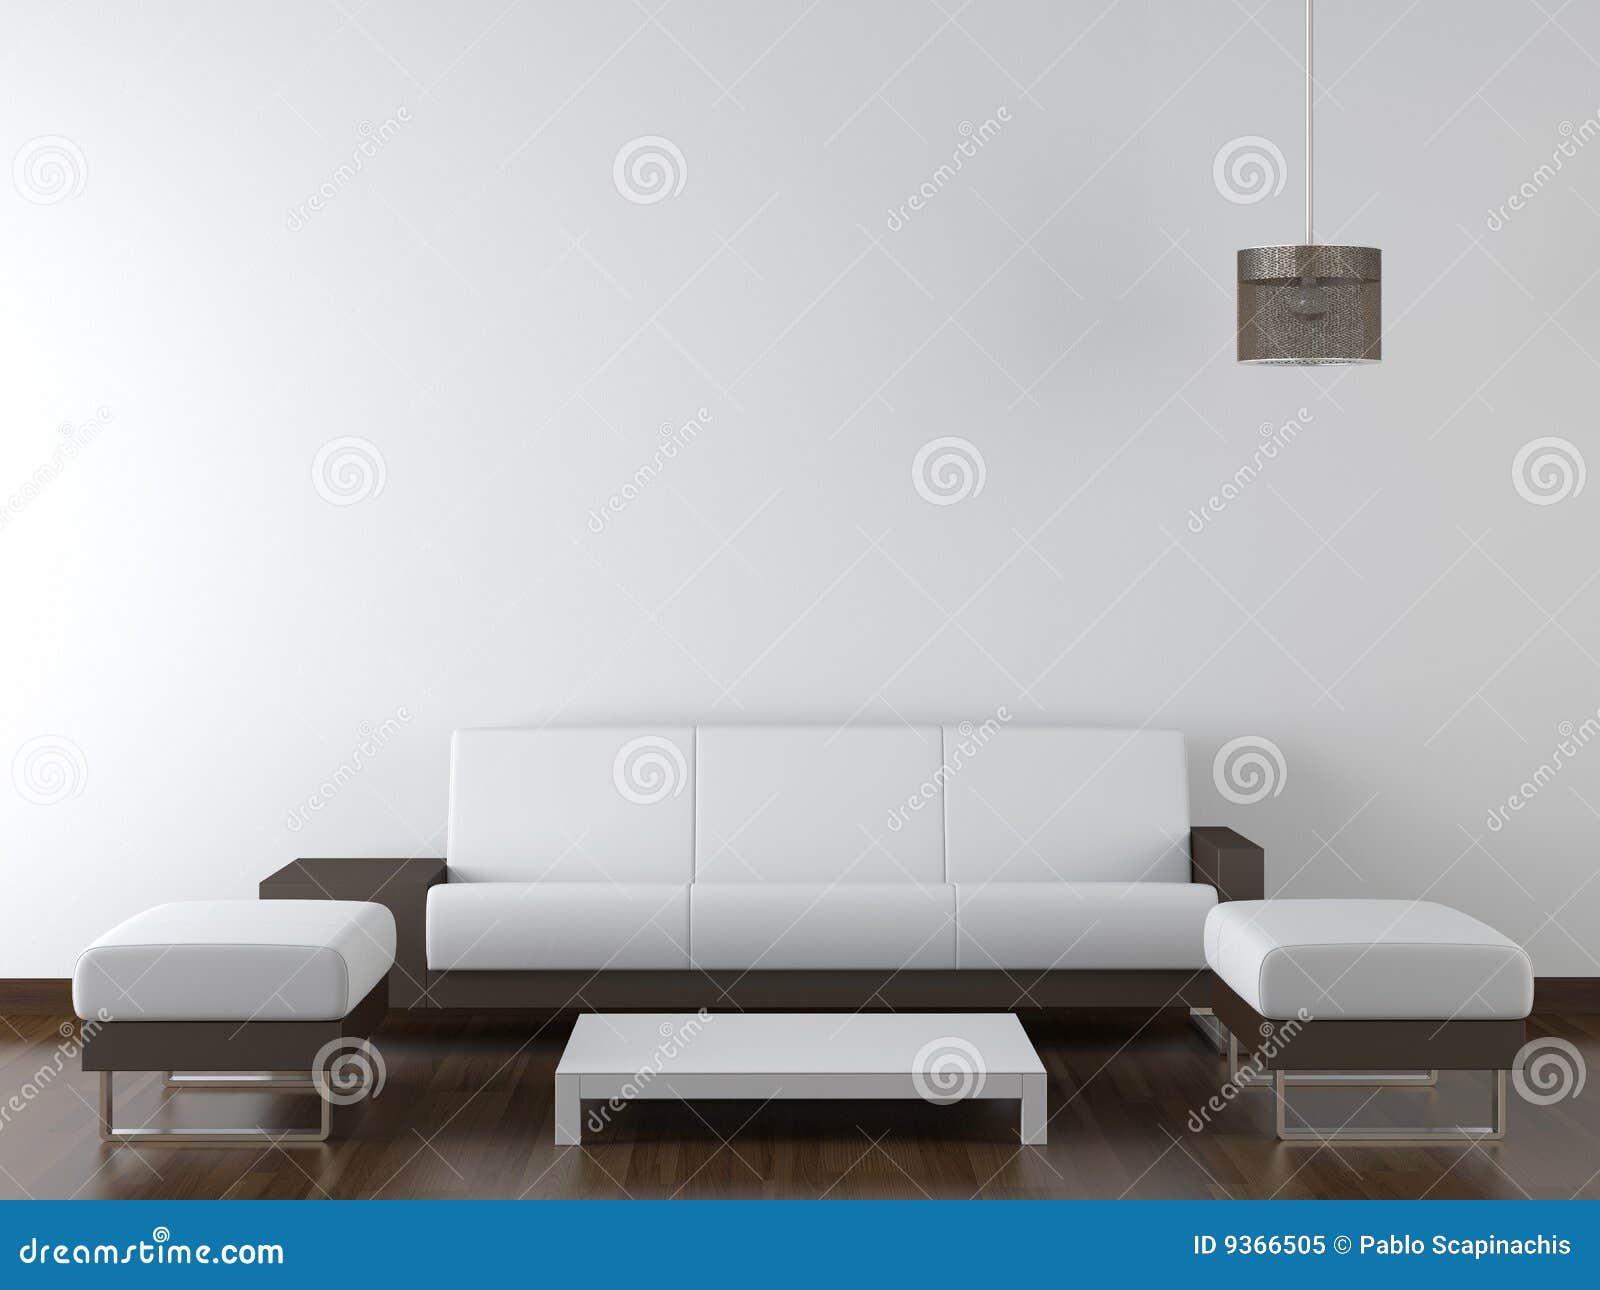 Interior Design Modern Furniture On White Wall Royalty Free Stock ...